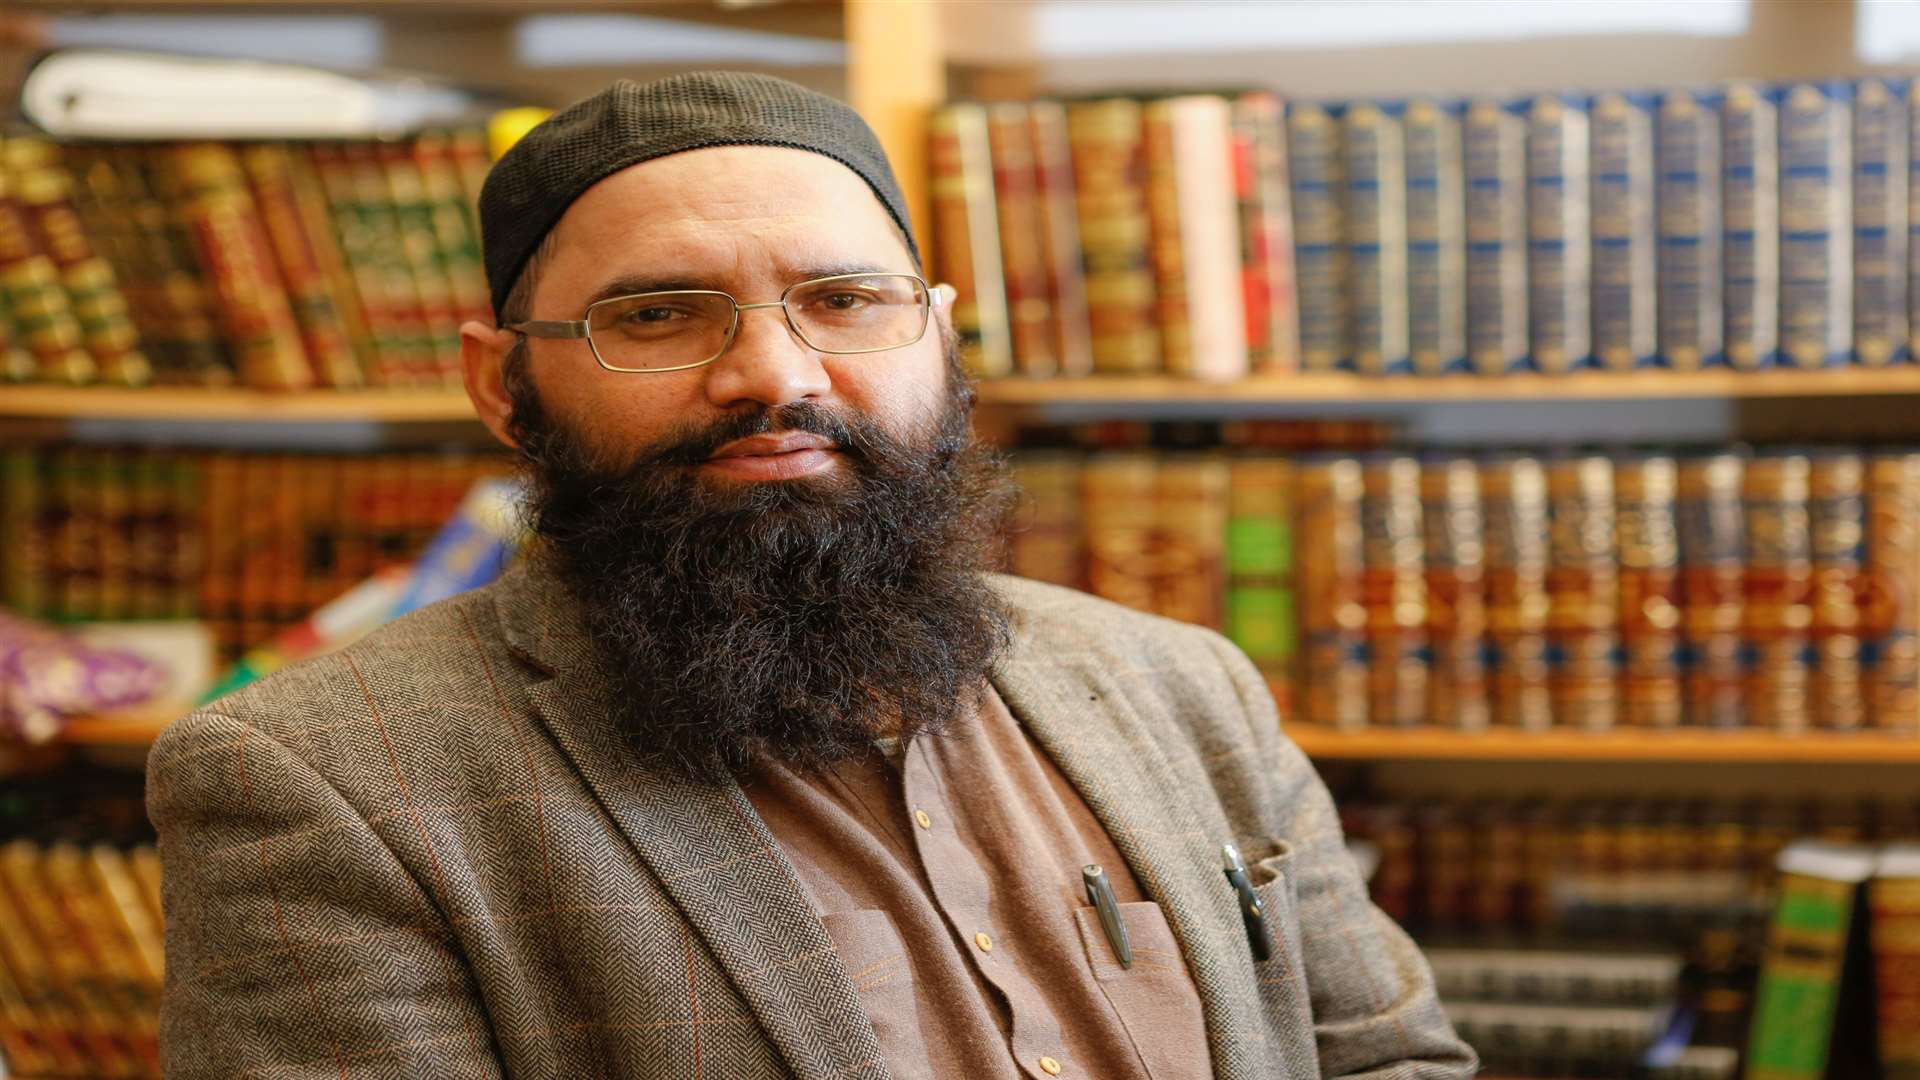 Imam of Maidstone Dr Muhammad Shabbir Usmani